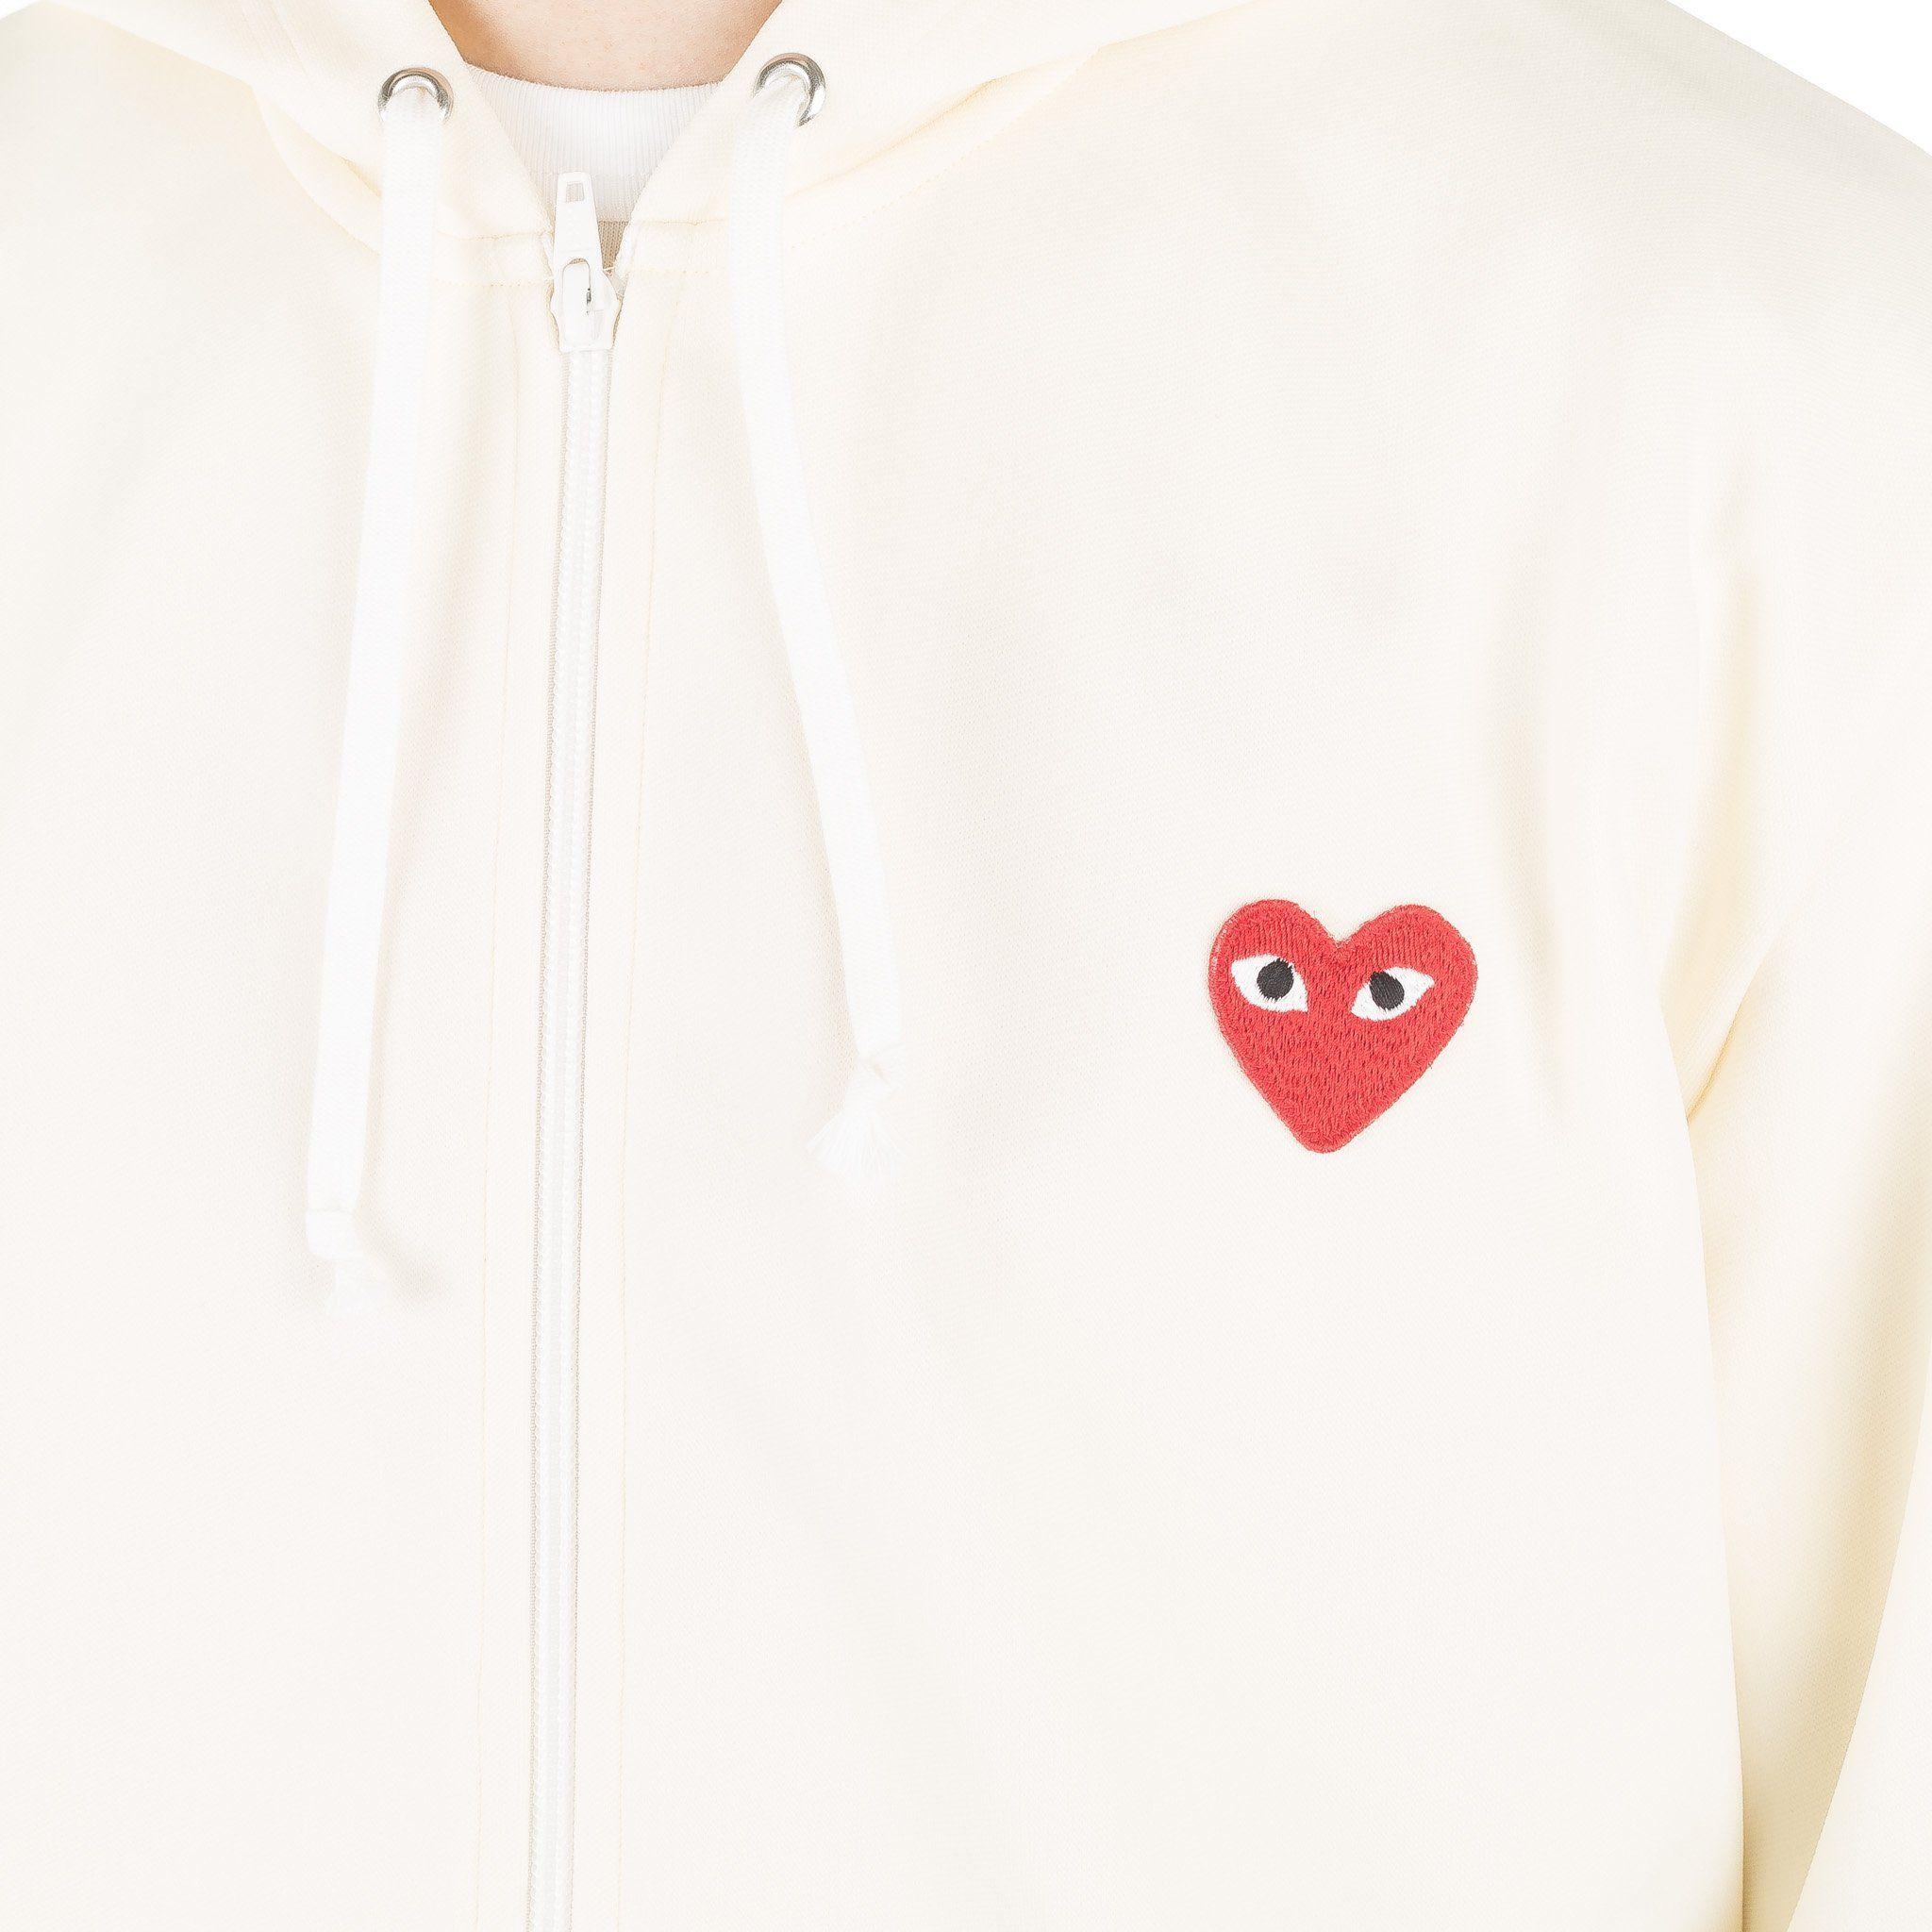 3 Heart Logo - HEART LOGO AZ T172 051 3 Zip Hoodie Cream